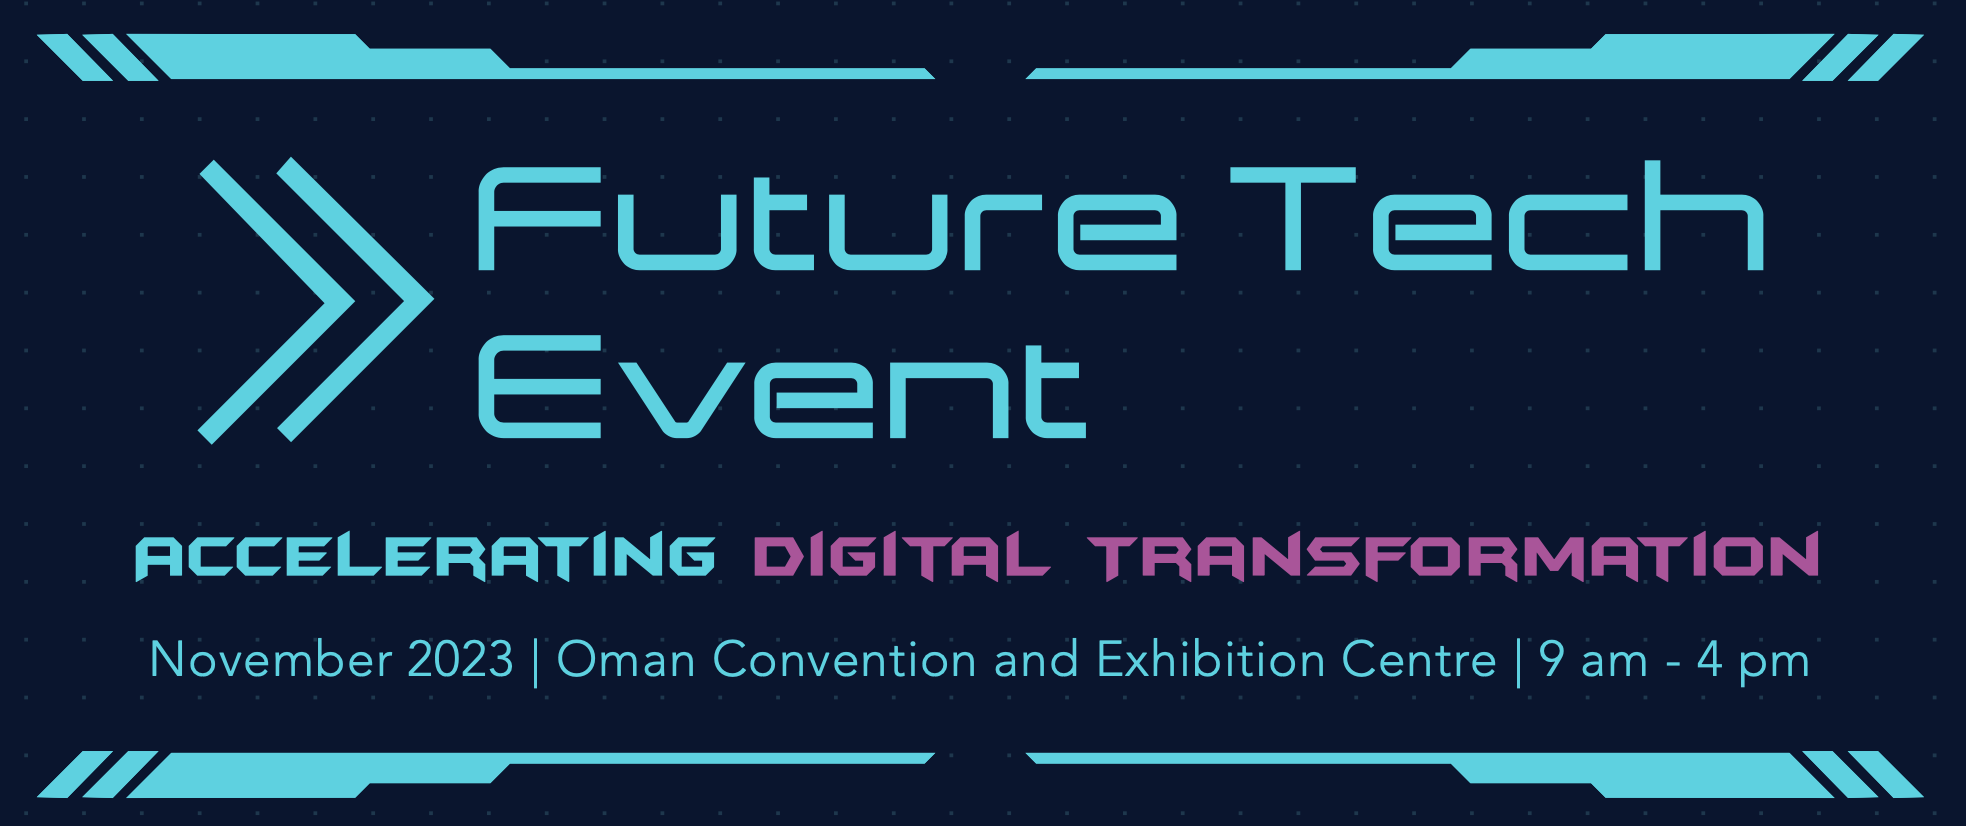 Future Tech Event 2023 organized by Ulrika Varela